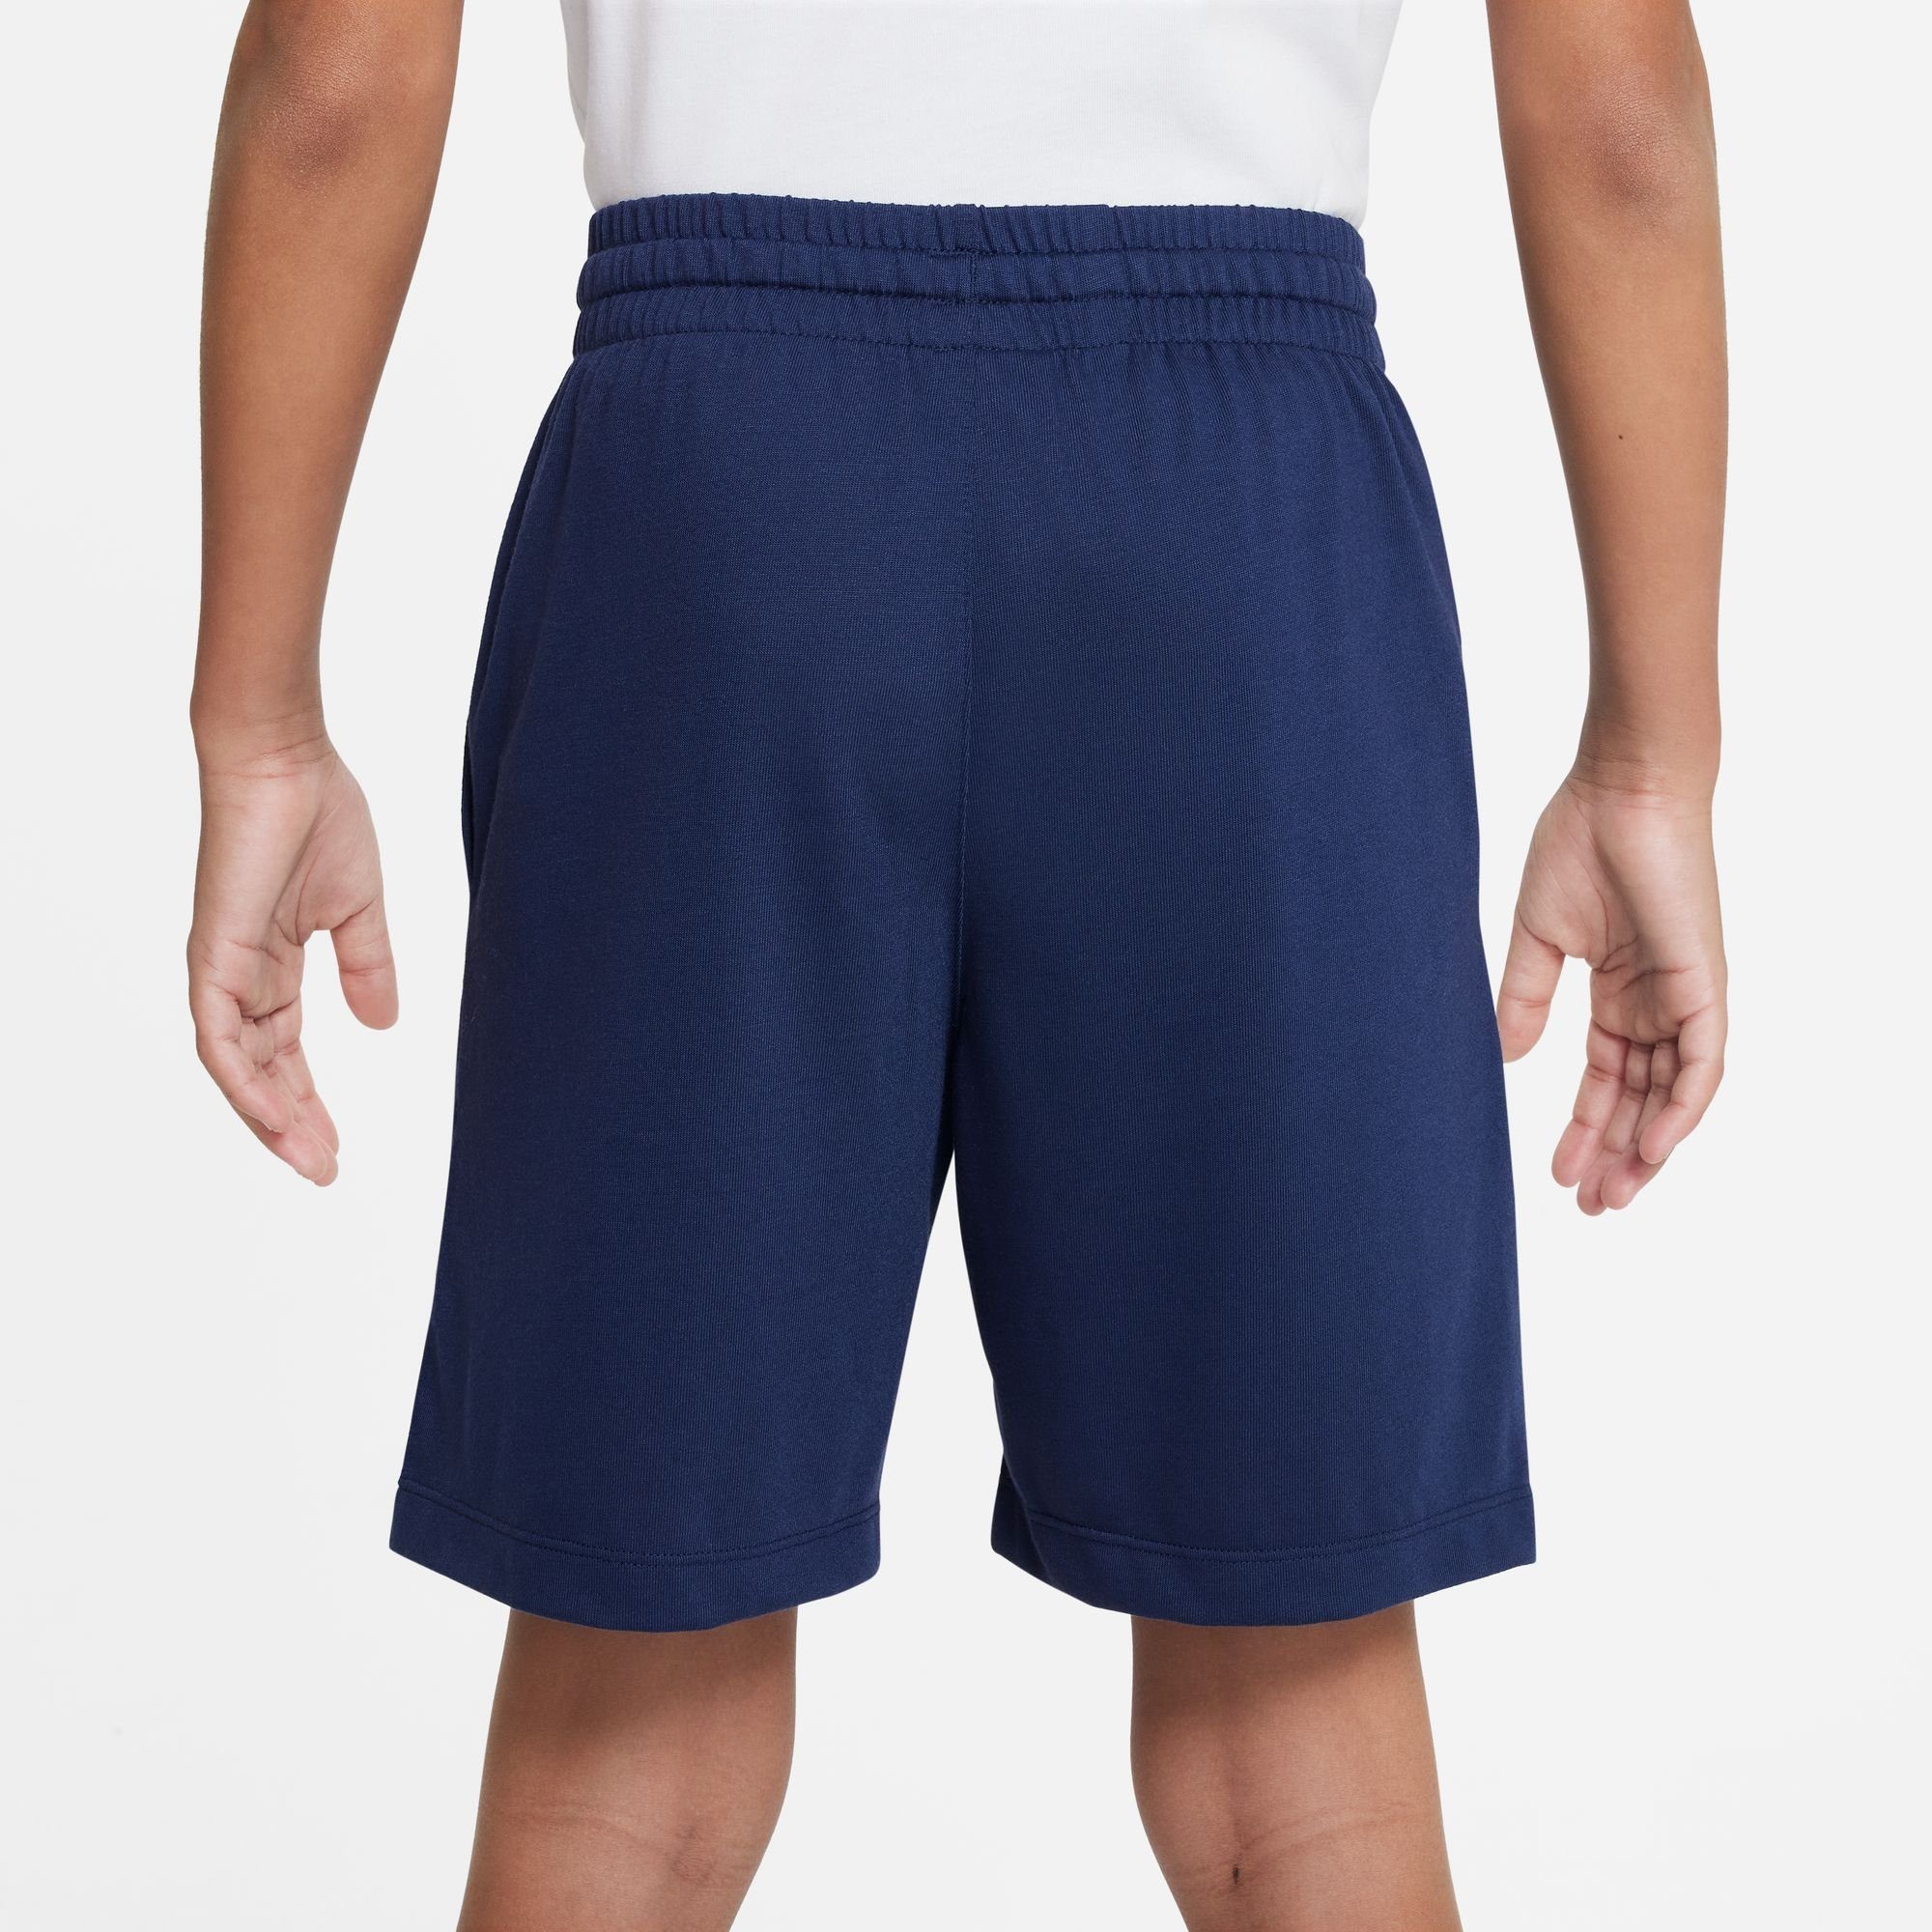 KIDS' (BOYS) JERSEY SHORTS Shorts Nike BIG Sportswear blau